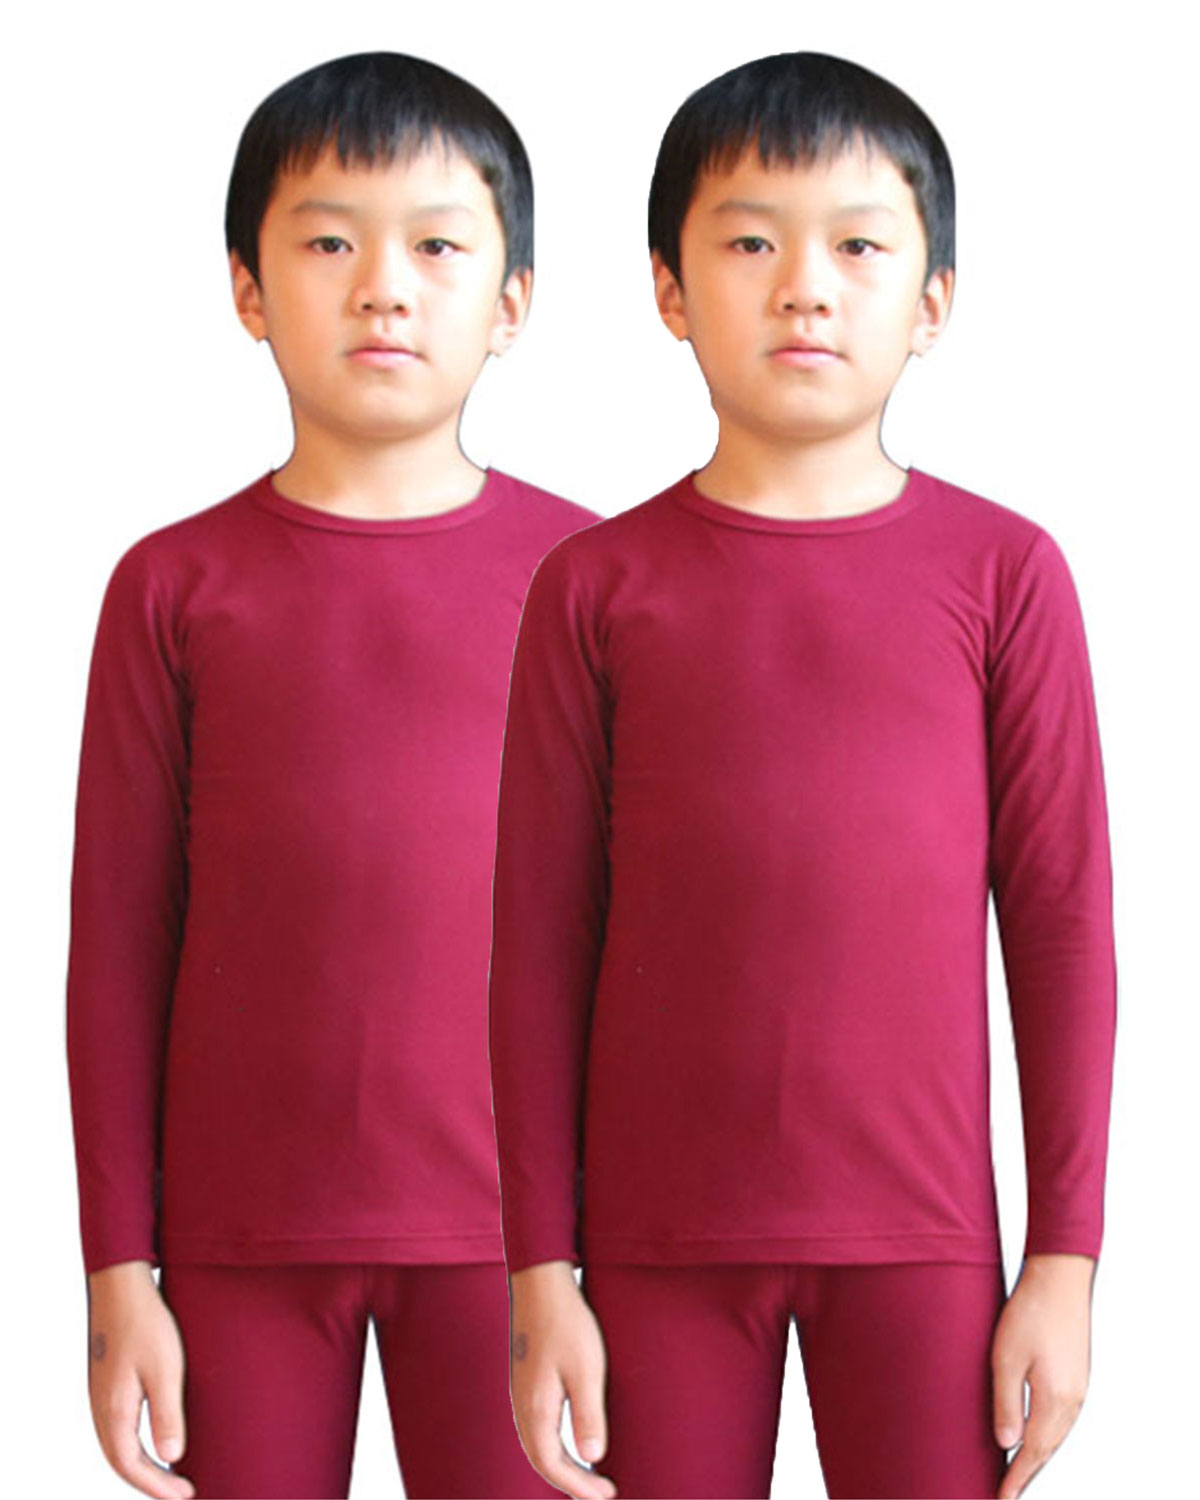 Boys Thermal Underwear Long John Top Ultra Soft Stretch Hockey Shirt LANBAOSI